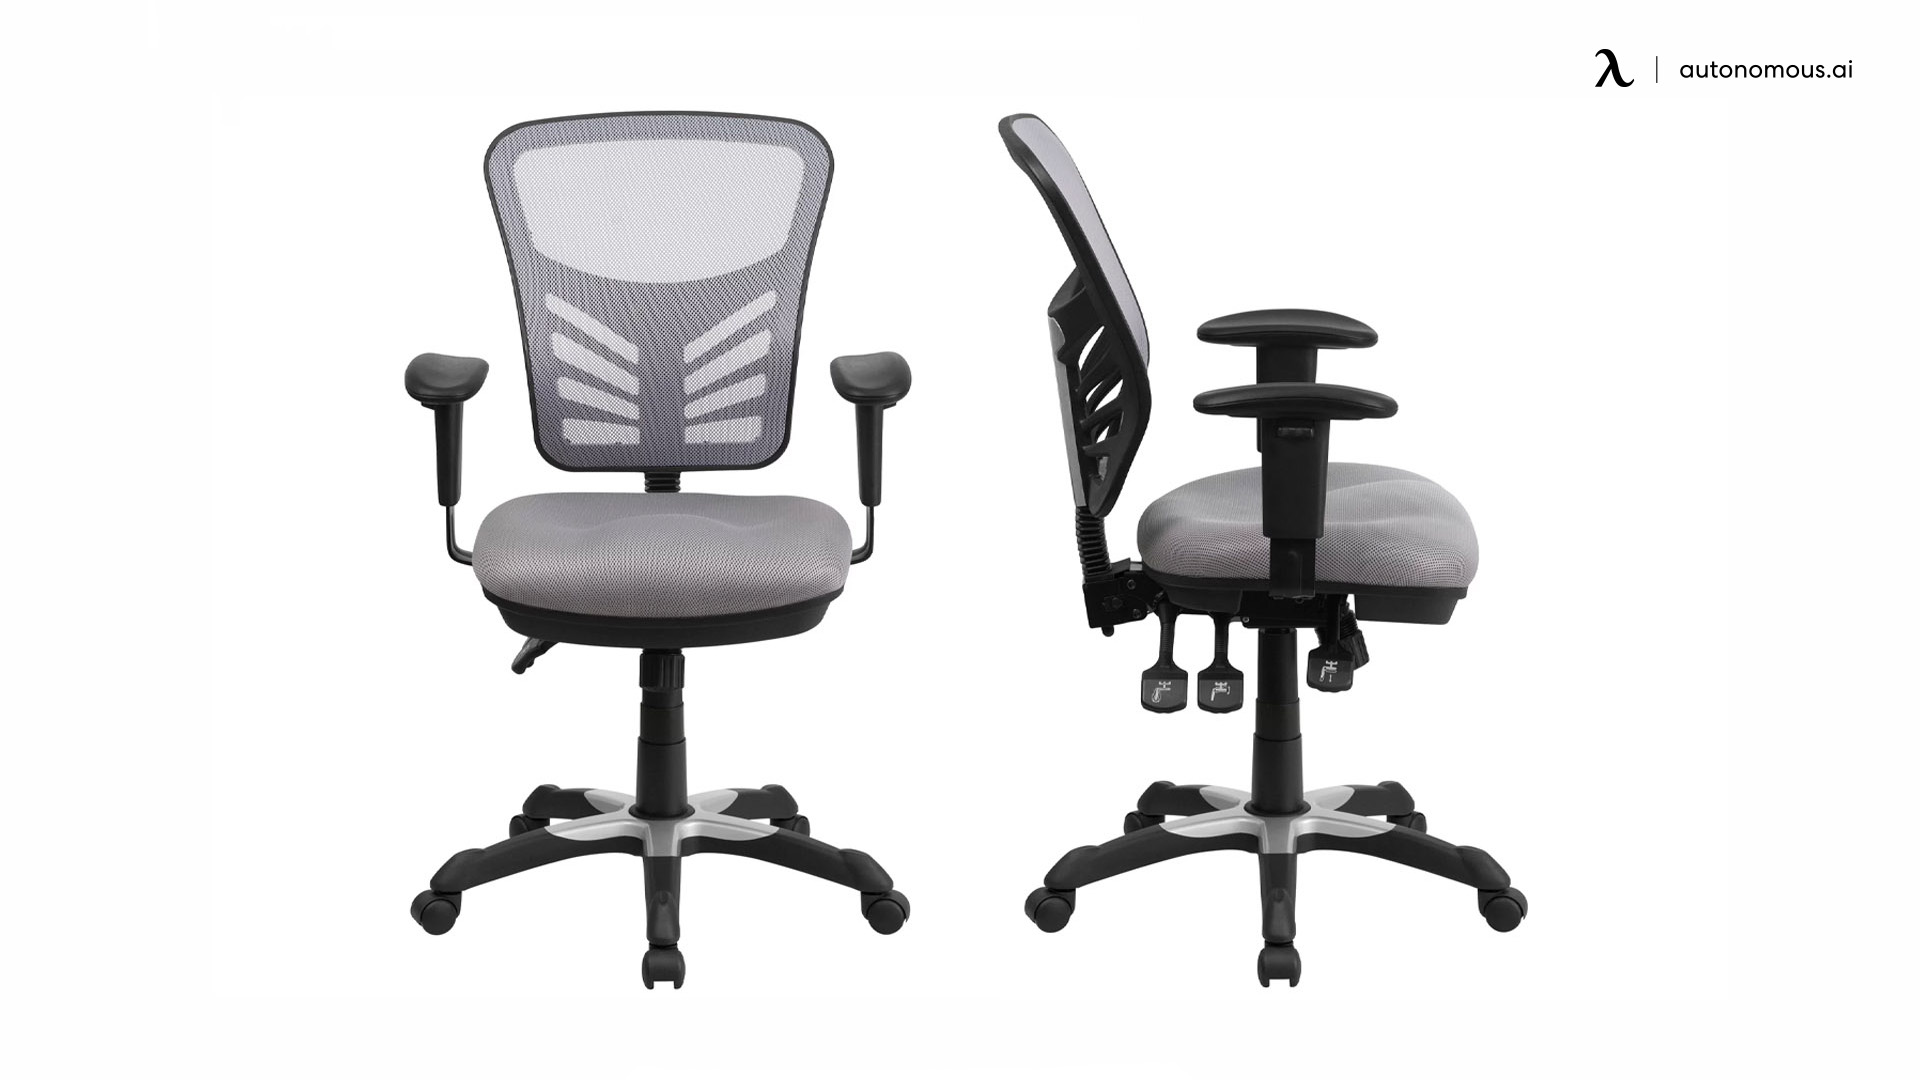 Billup ergonomic office chair